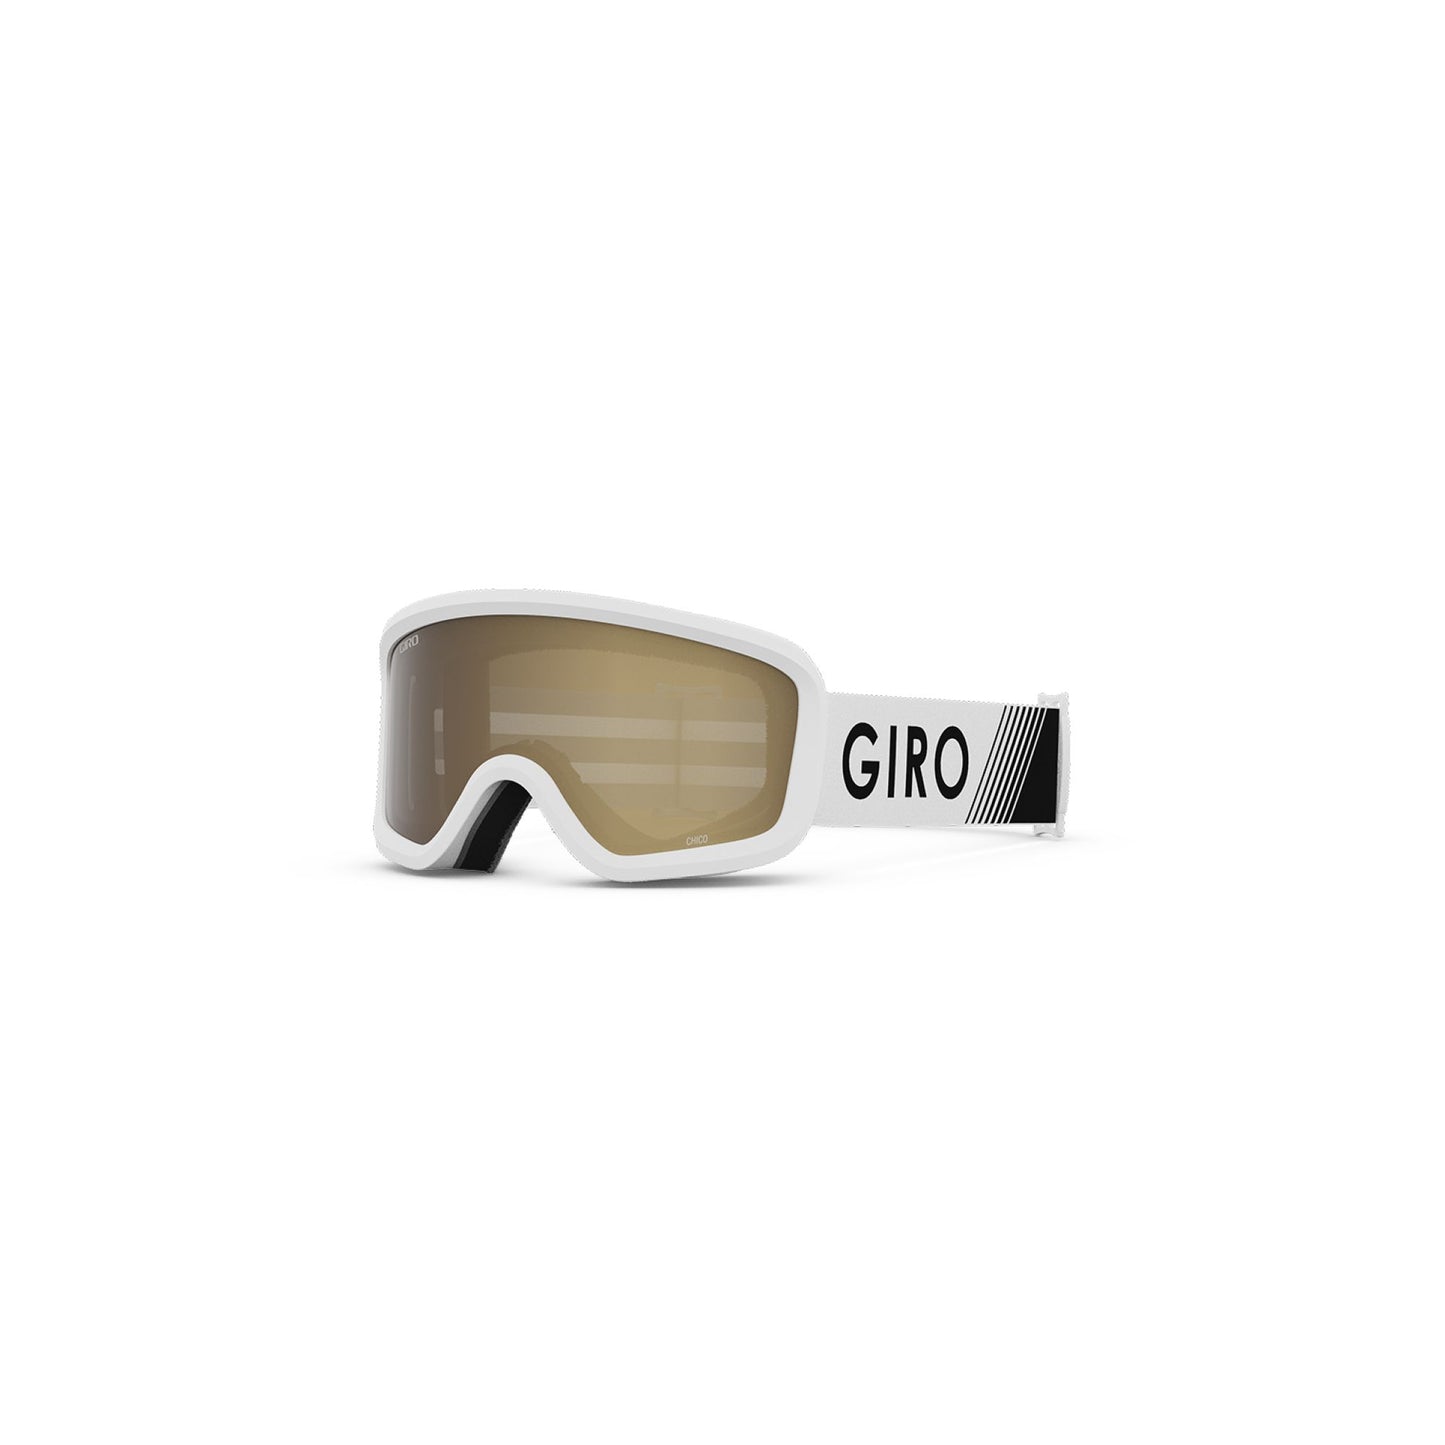 Giro Youth Chico 2.0 Snow Goggle - OpenBox White Zoom Amber Rose - Giro Snow Snow Goggles